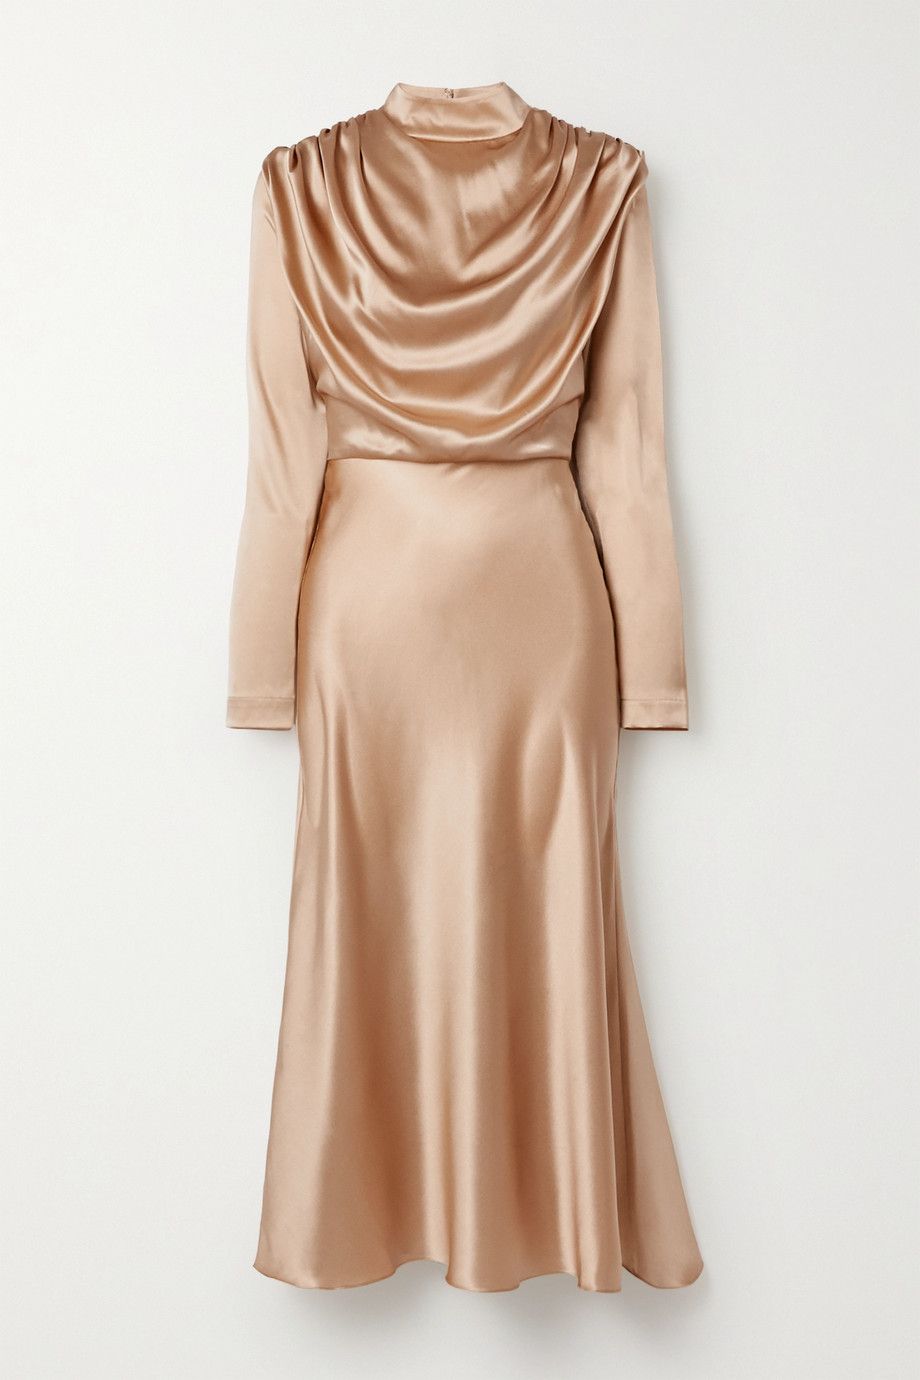 bronze bridesmaid dresses uk